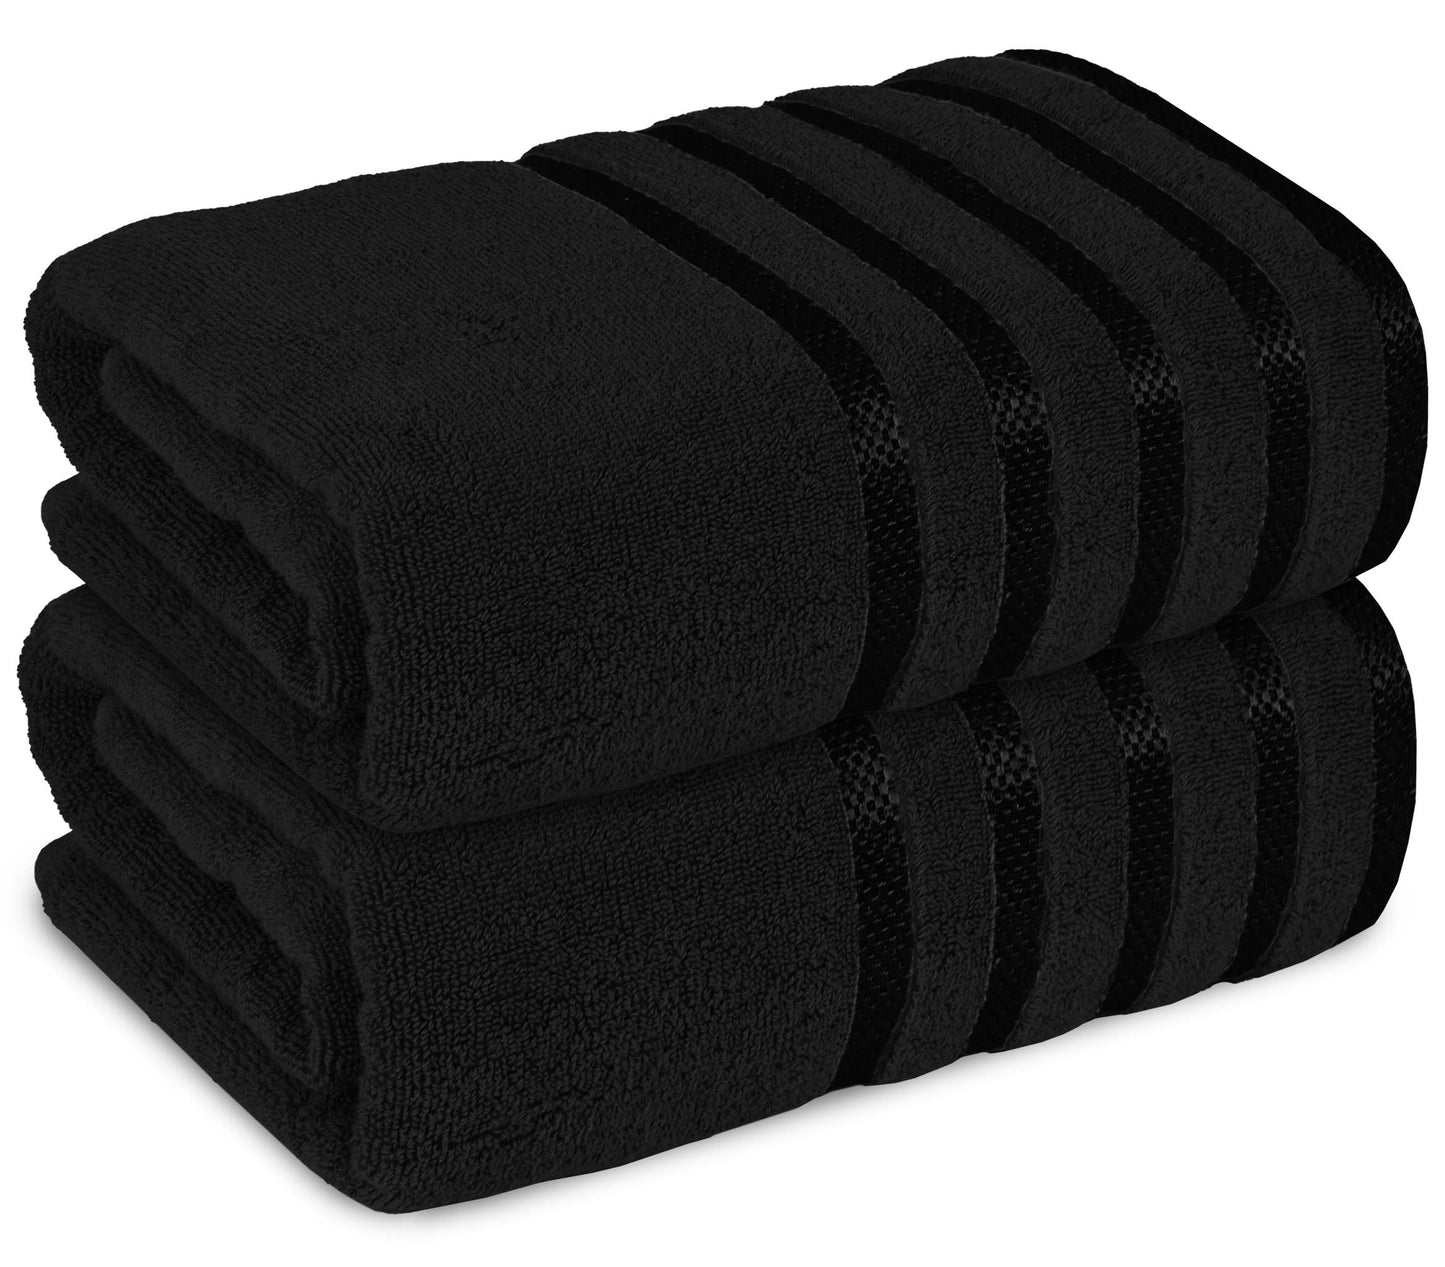 2 Pc ultrasoft and quick dry viscose bath sheet set | Eco-friendly and skin-friendly made of 100% Cotton | 2 bath sheets 90x180cm / 35x70inch-Towel Set-Weave Essentials-2x Jumbo Bath Sheet-Charcoal Black-Weave Essentials